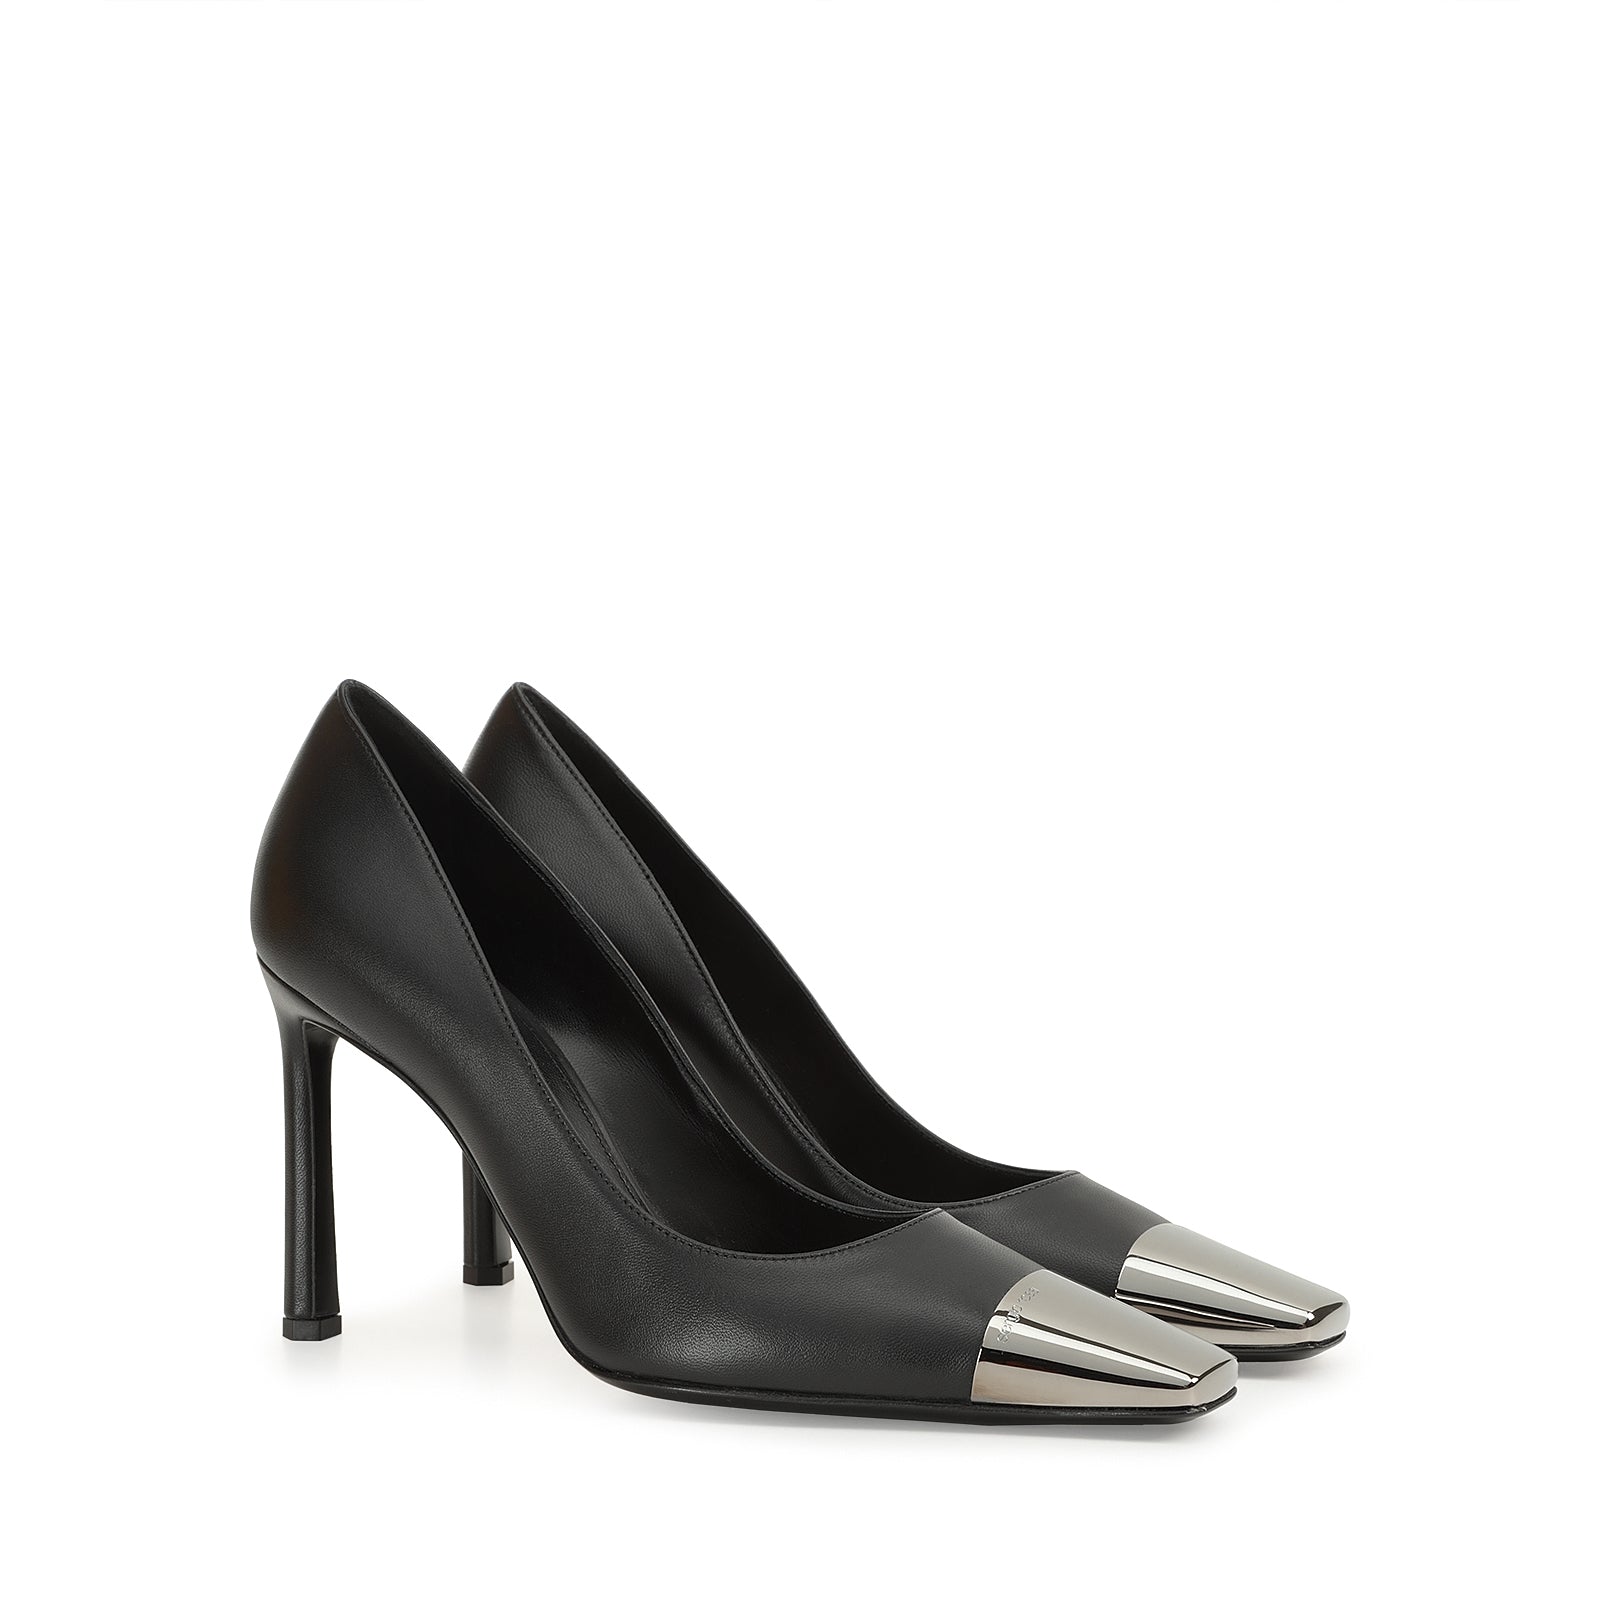 Louis Vuitton "Oh Really" Peep Toe Pump Shoes 39 US 9 black  patent